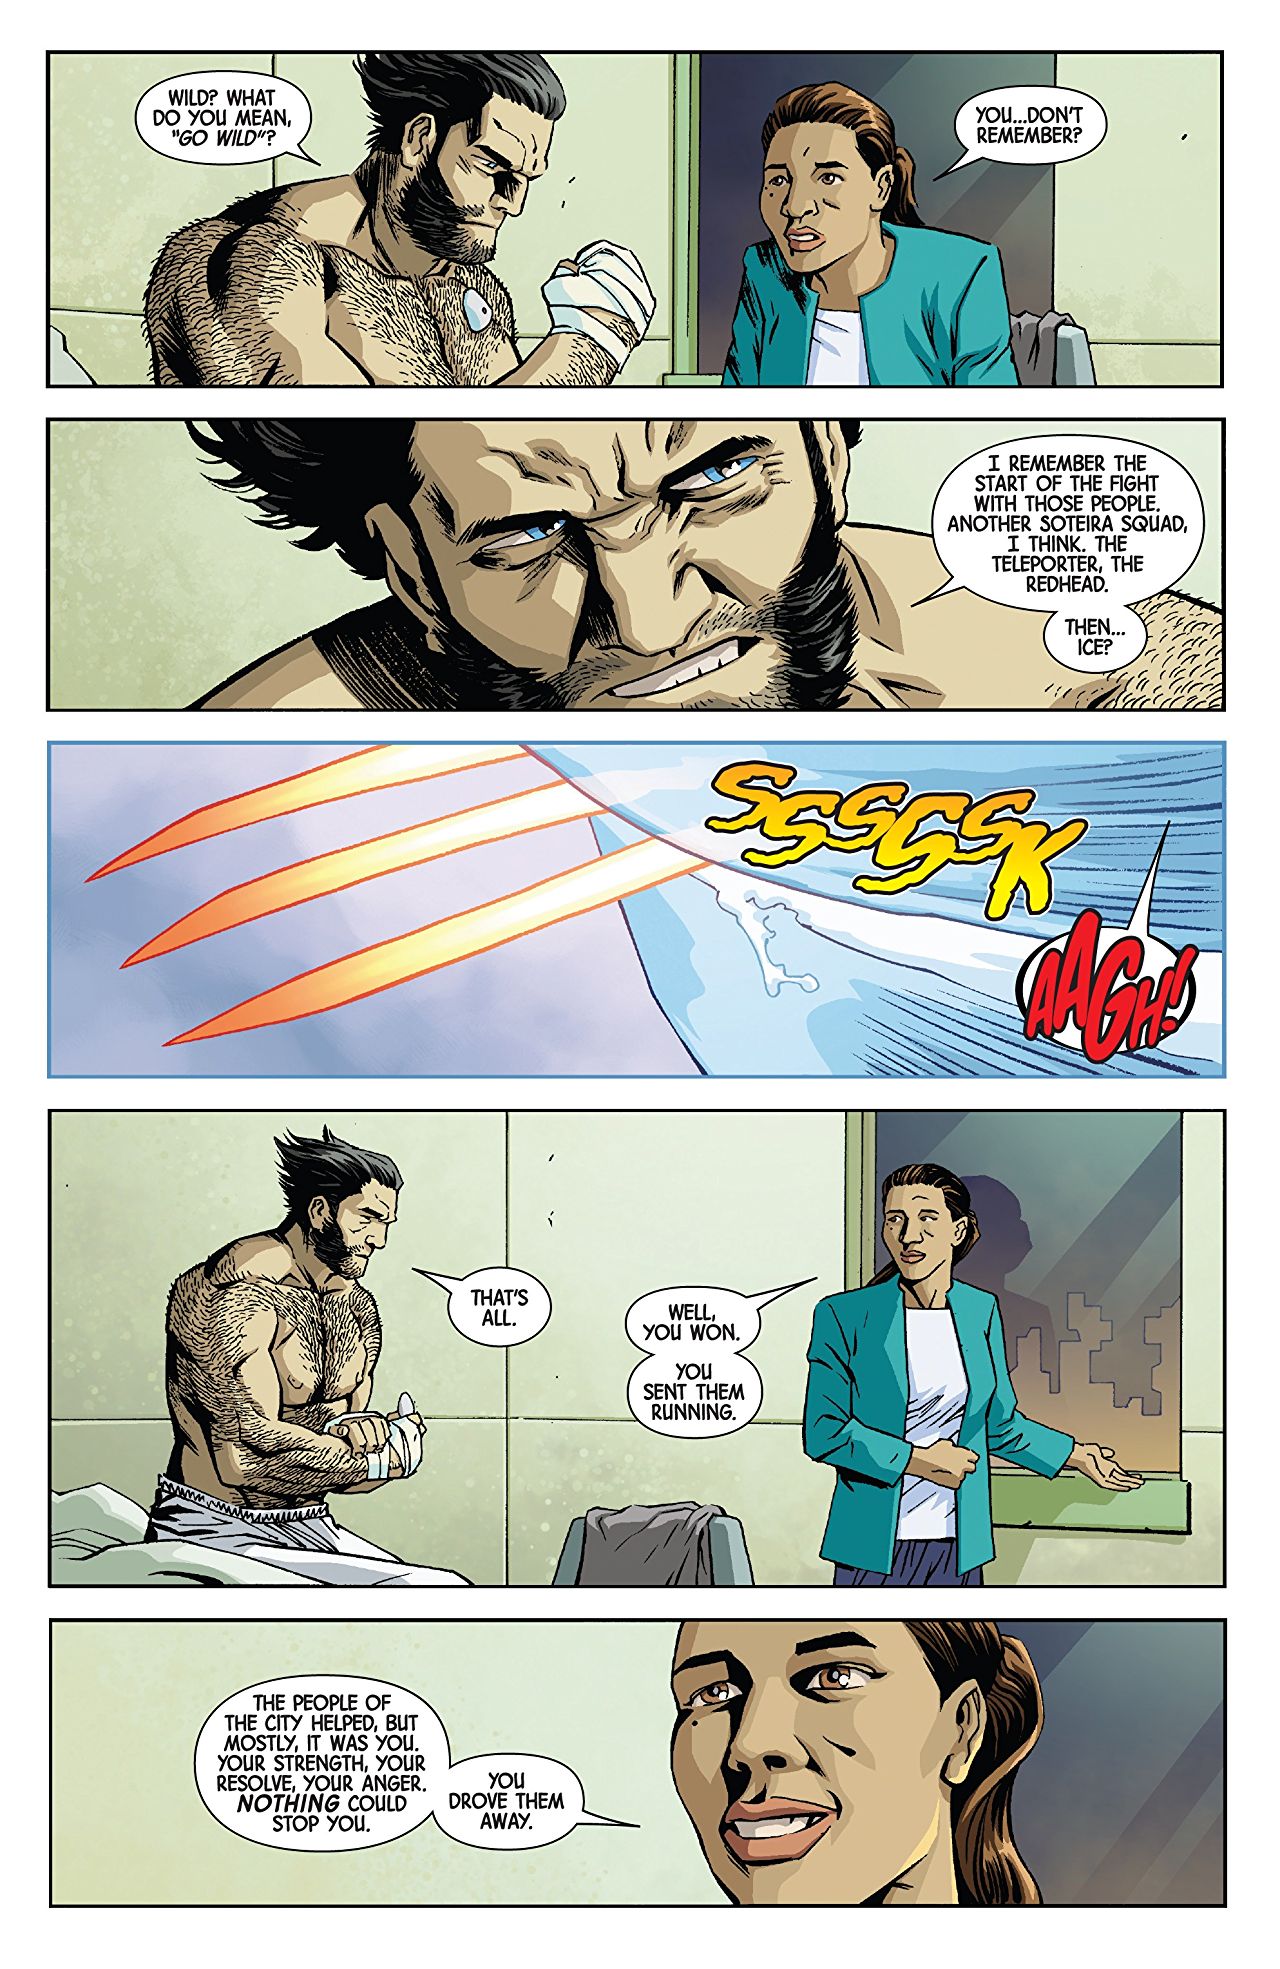 CB4421 Details about   Return of Wolverine #4 Marvel VF/NM 9.0 